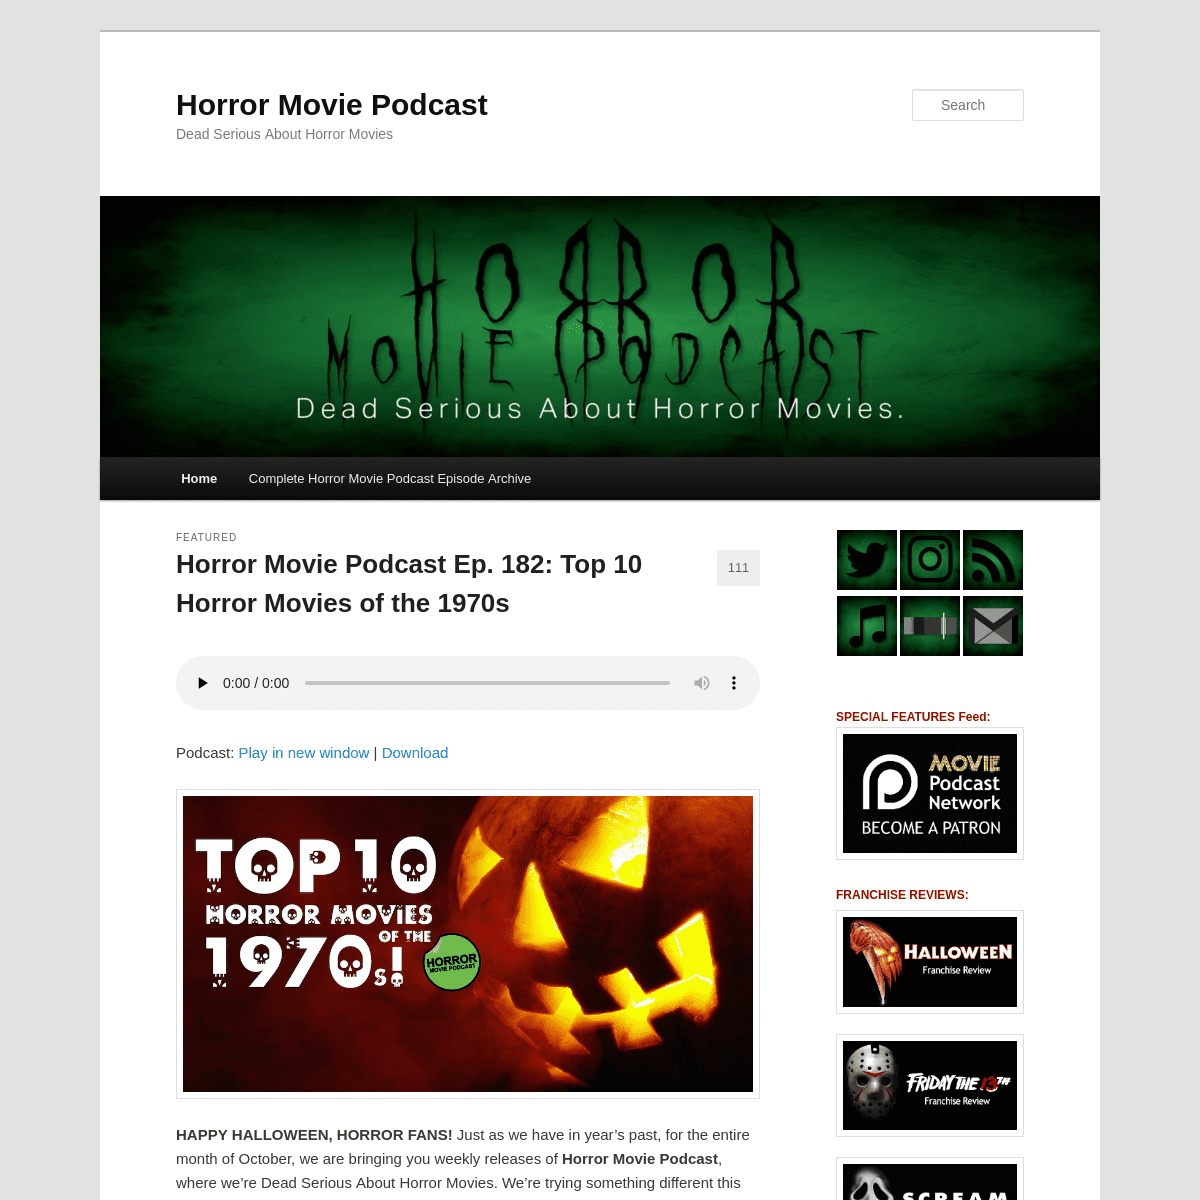 A complete backup of horrormoviepodcast.com